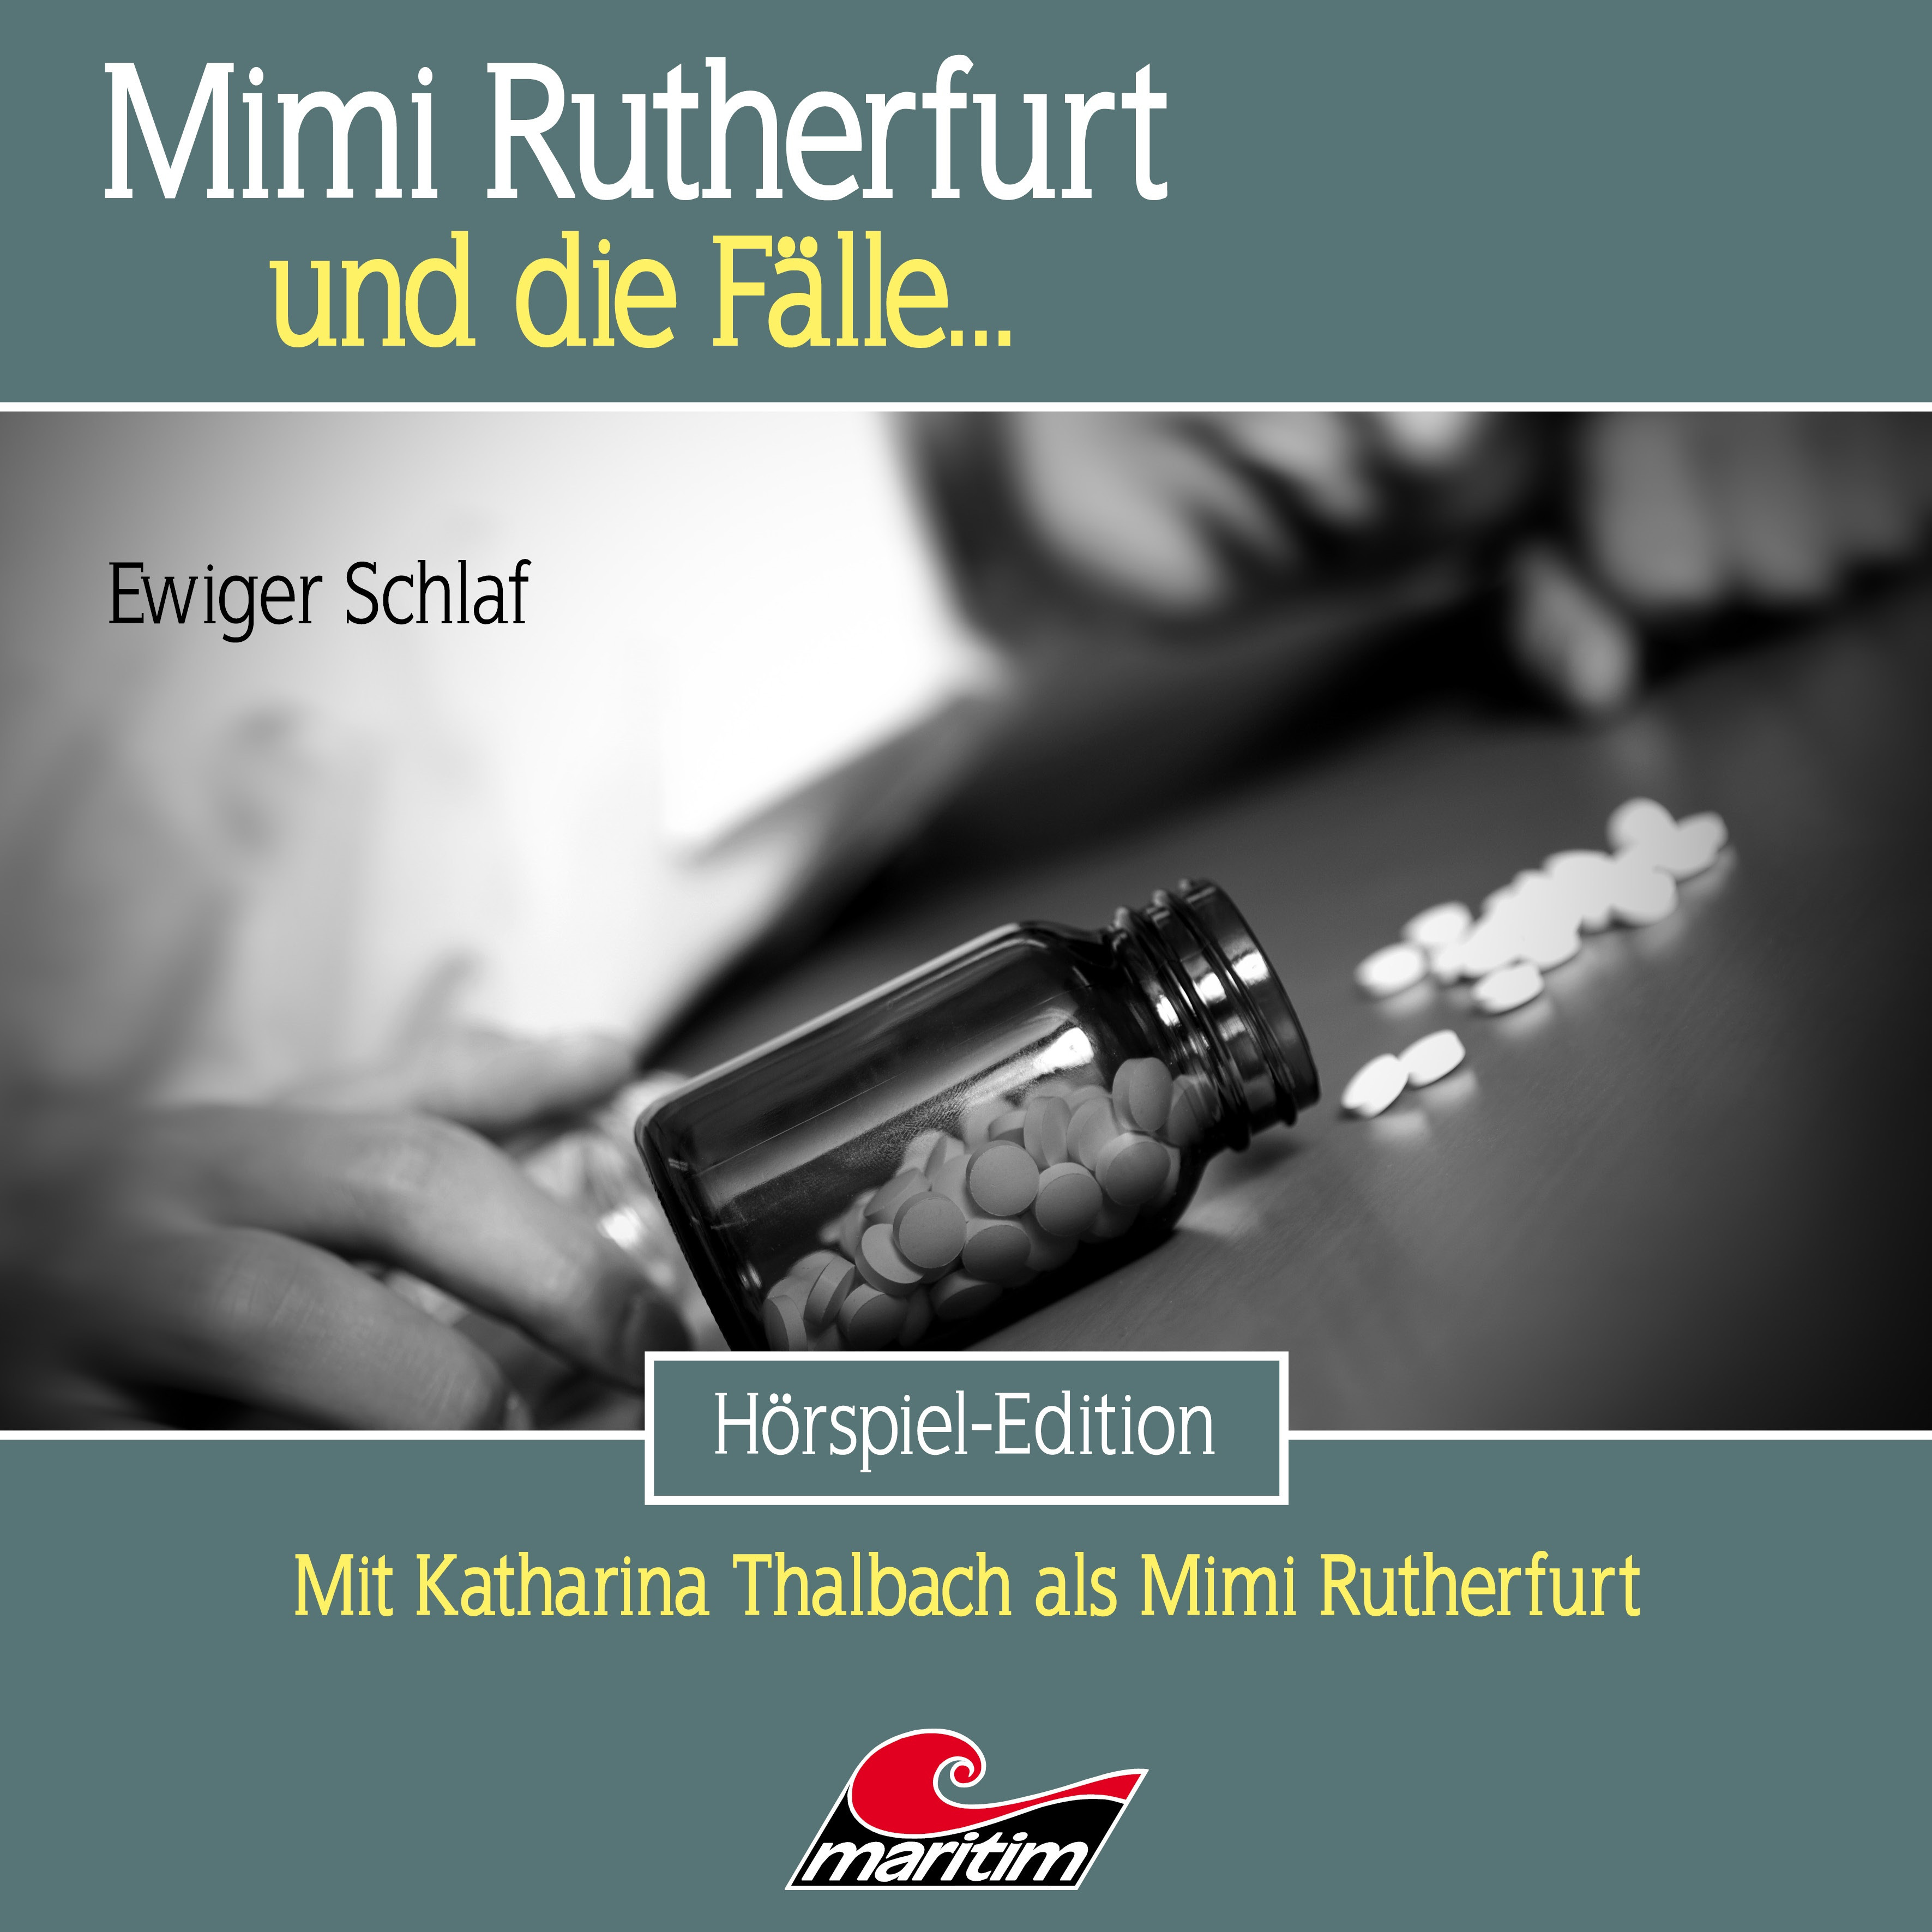 Mimi Rutherfurt 55: Ewiger Schlaf